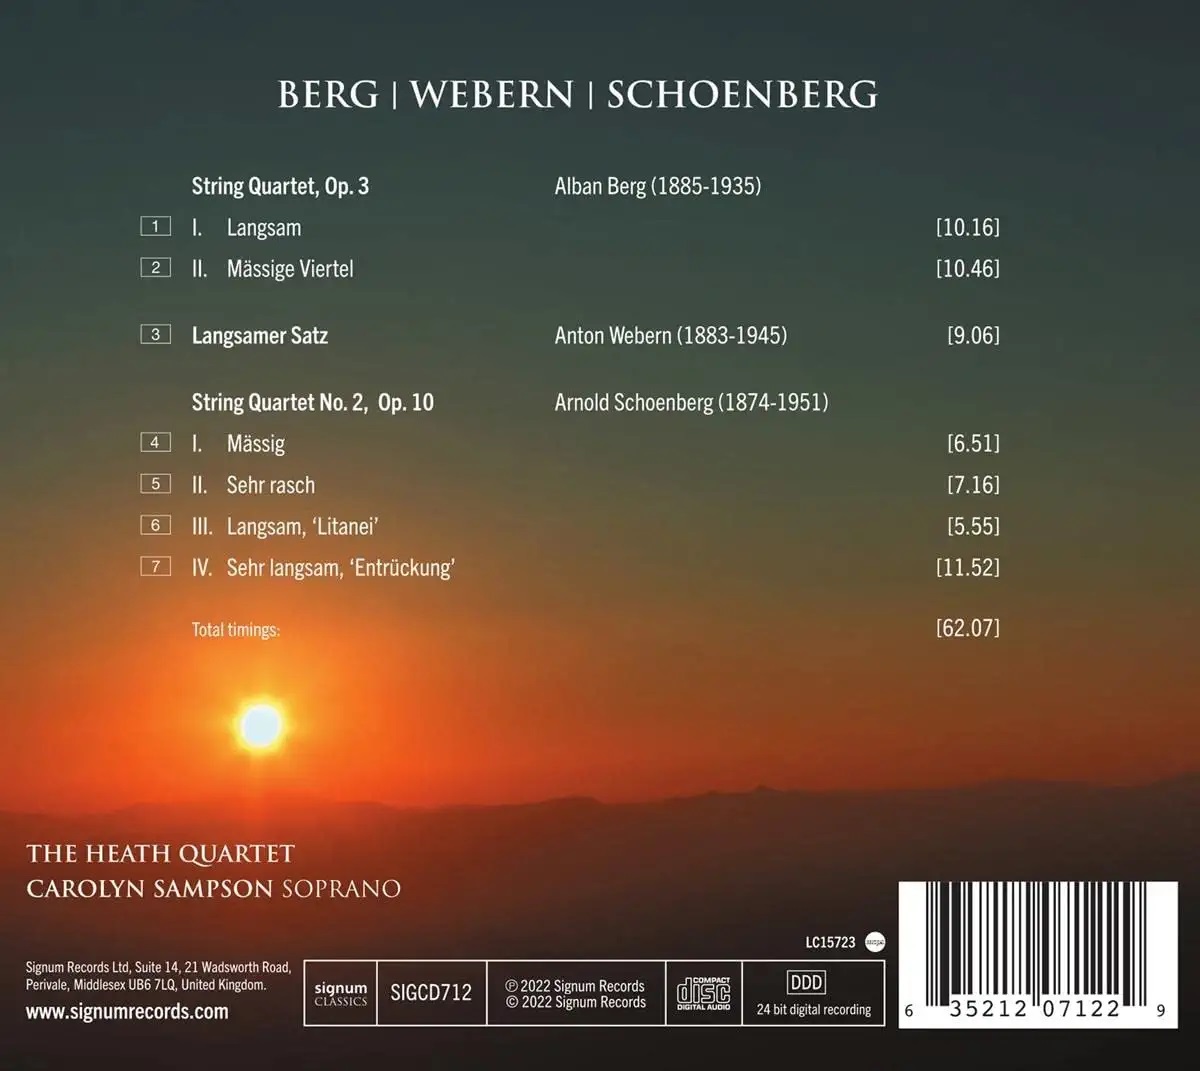 Heath Quartet 베르크: 현악 사중주 / 베베른: 느린악장 / 쇤베르그: 현악 사중주 2번 (Berg: String Quartet / Webern: Langsamer Satz / Schoenberg: String Quartet No. 2)